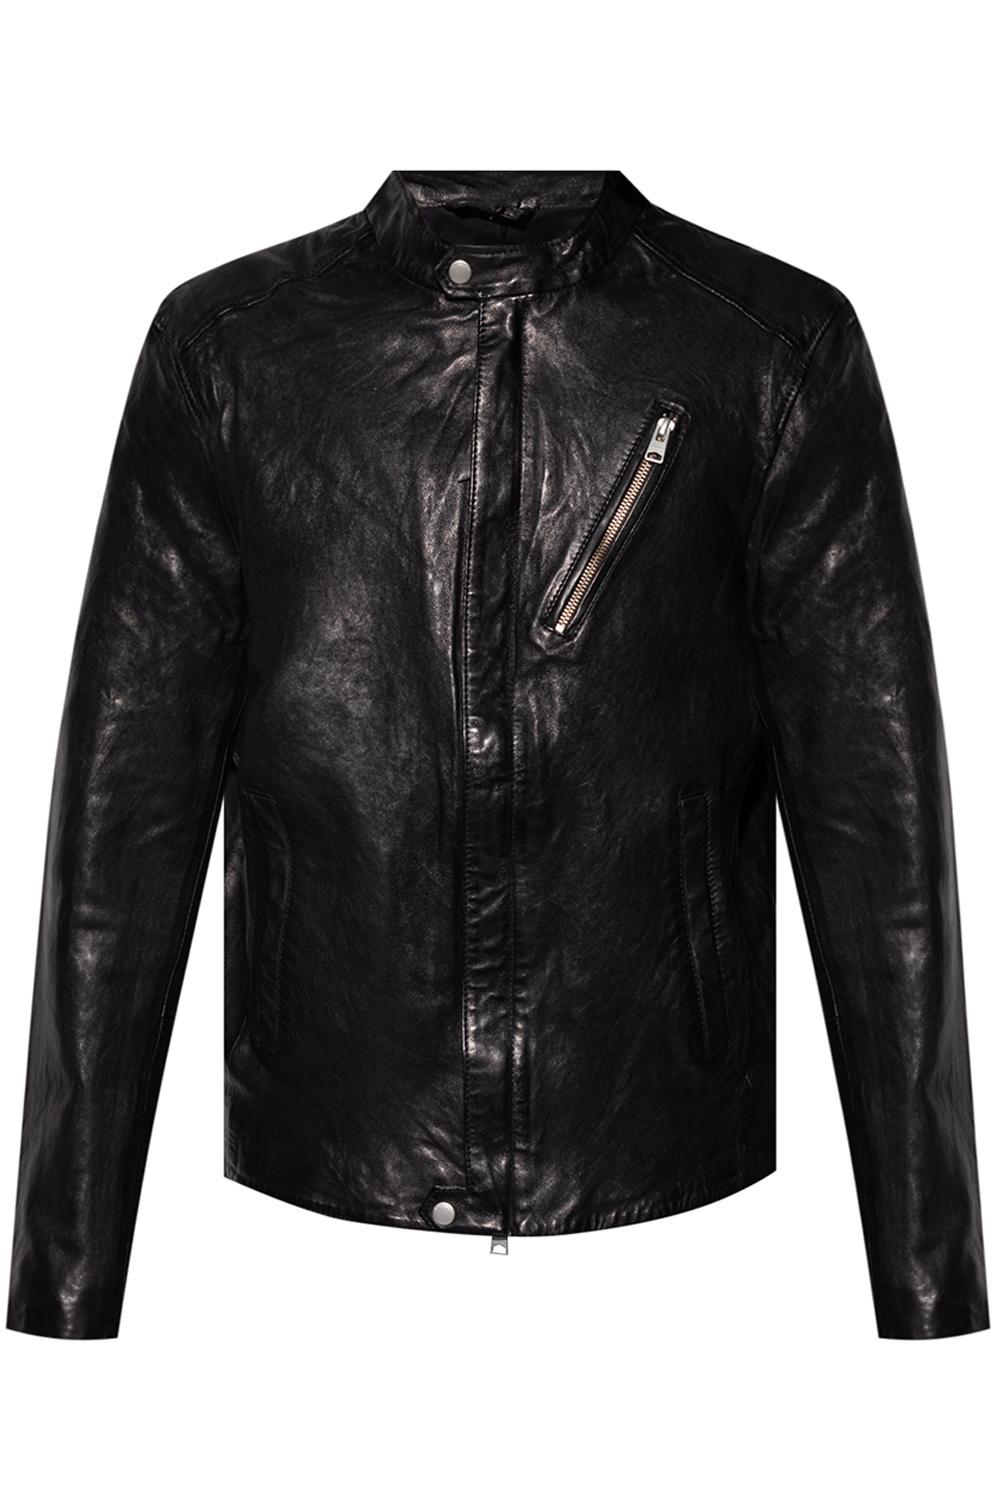 AllSaints 'floyd' Leather Jacket in Black for Men | Lyst